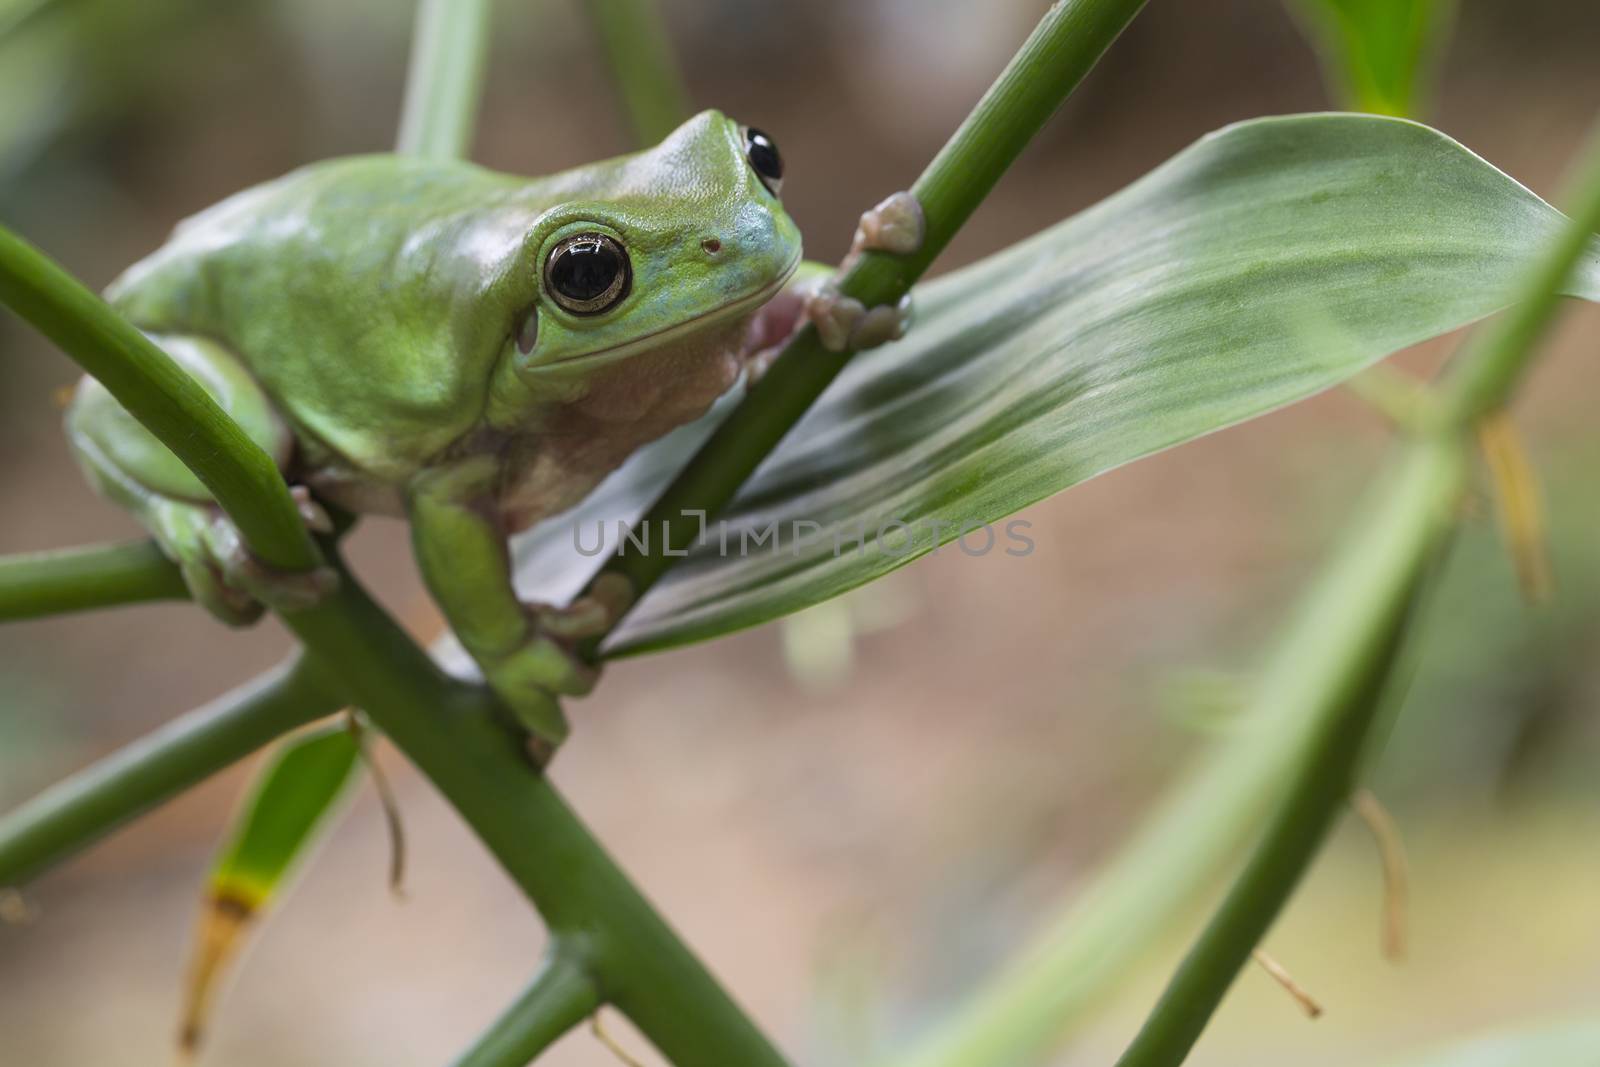 Australian Green Tree Frog by andrew_blue